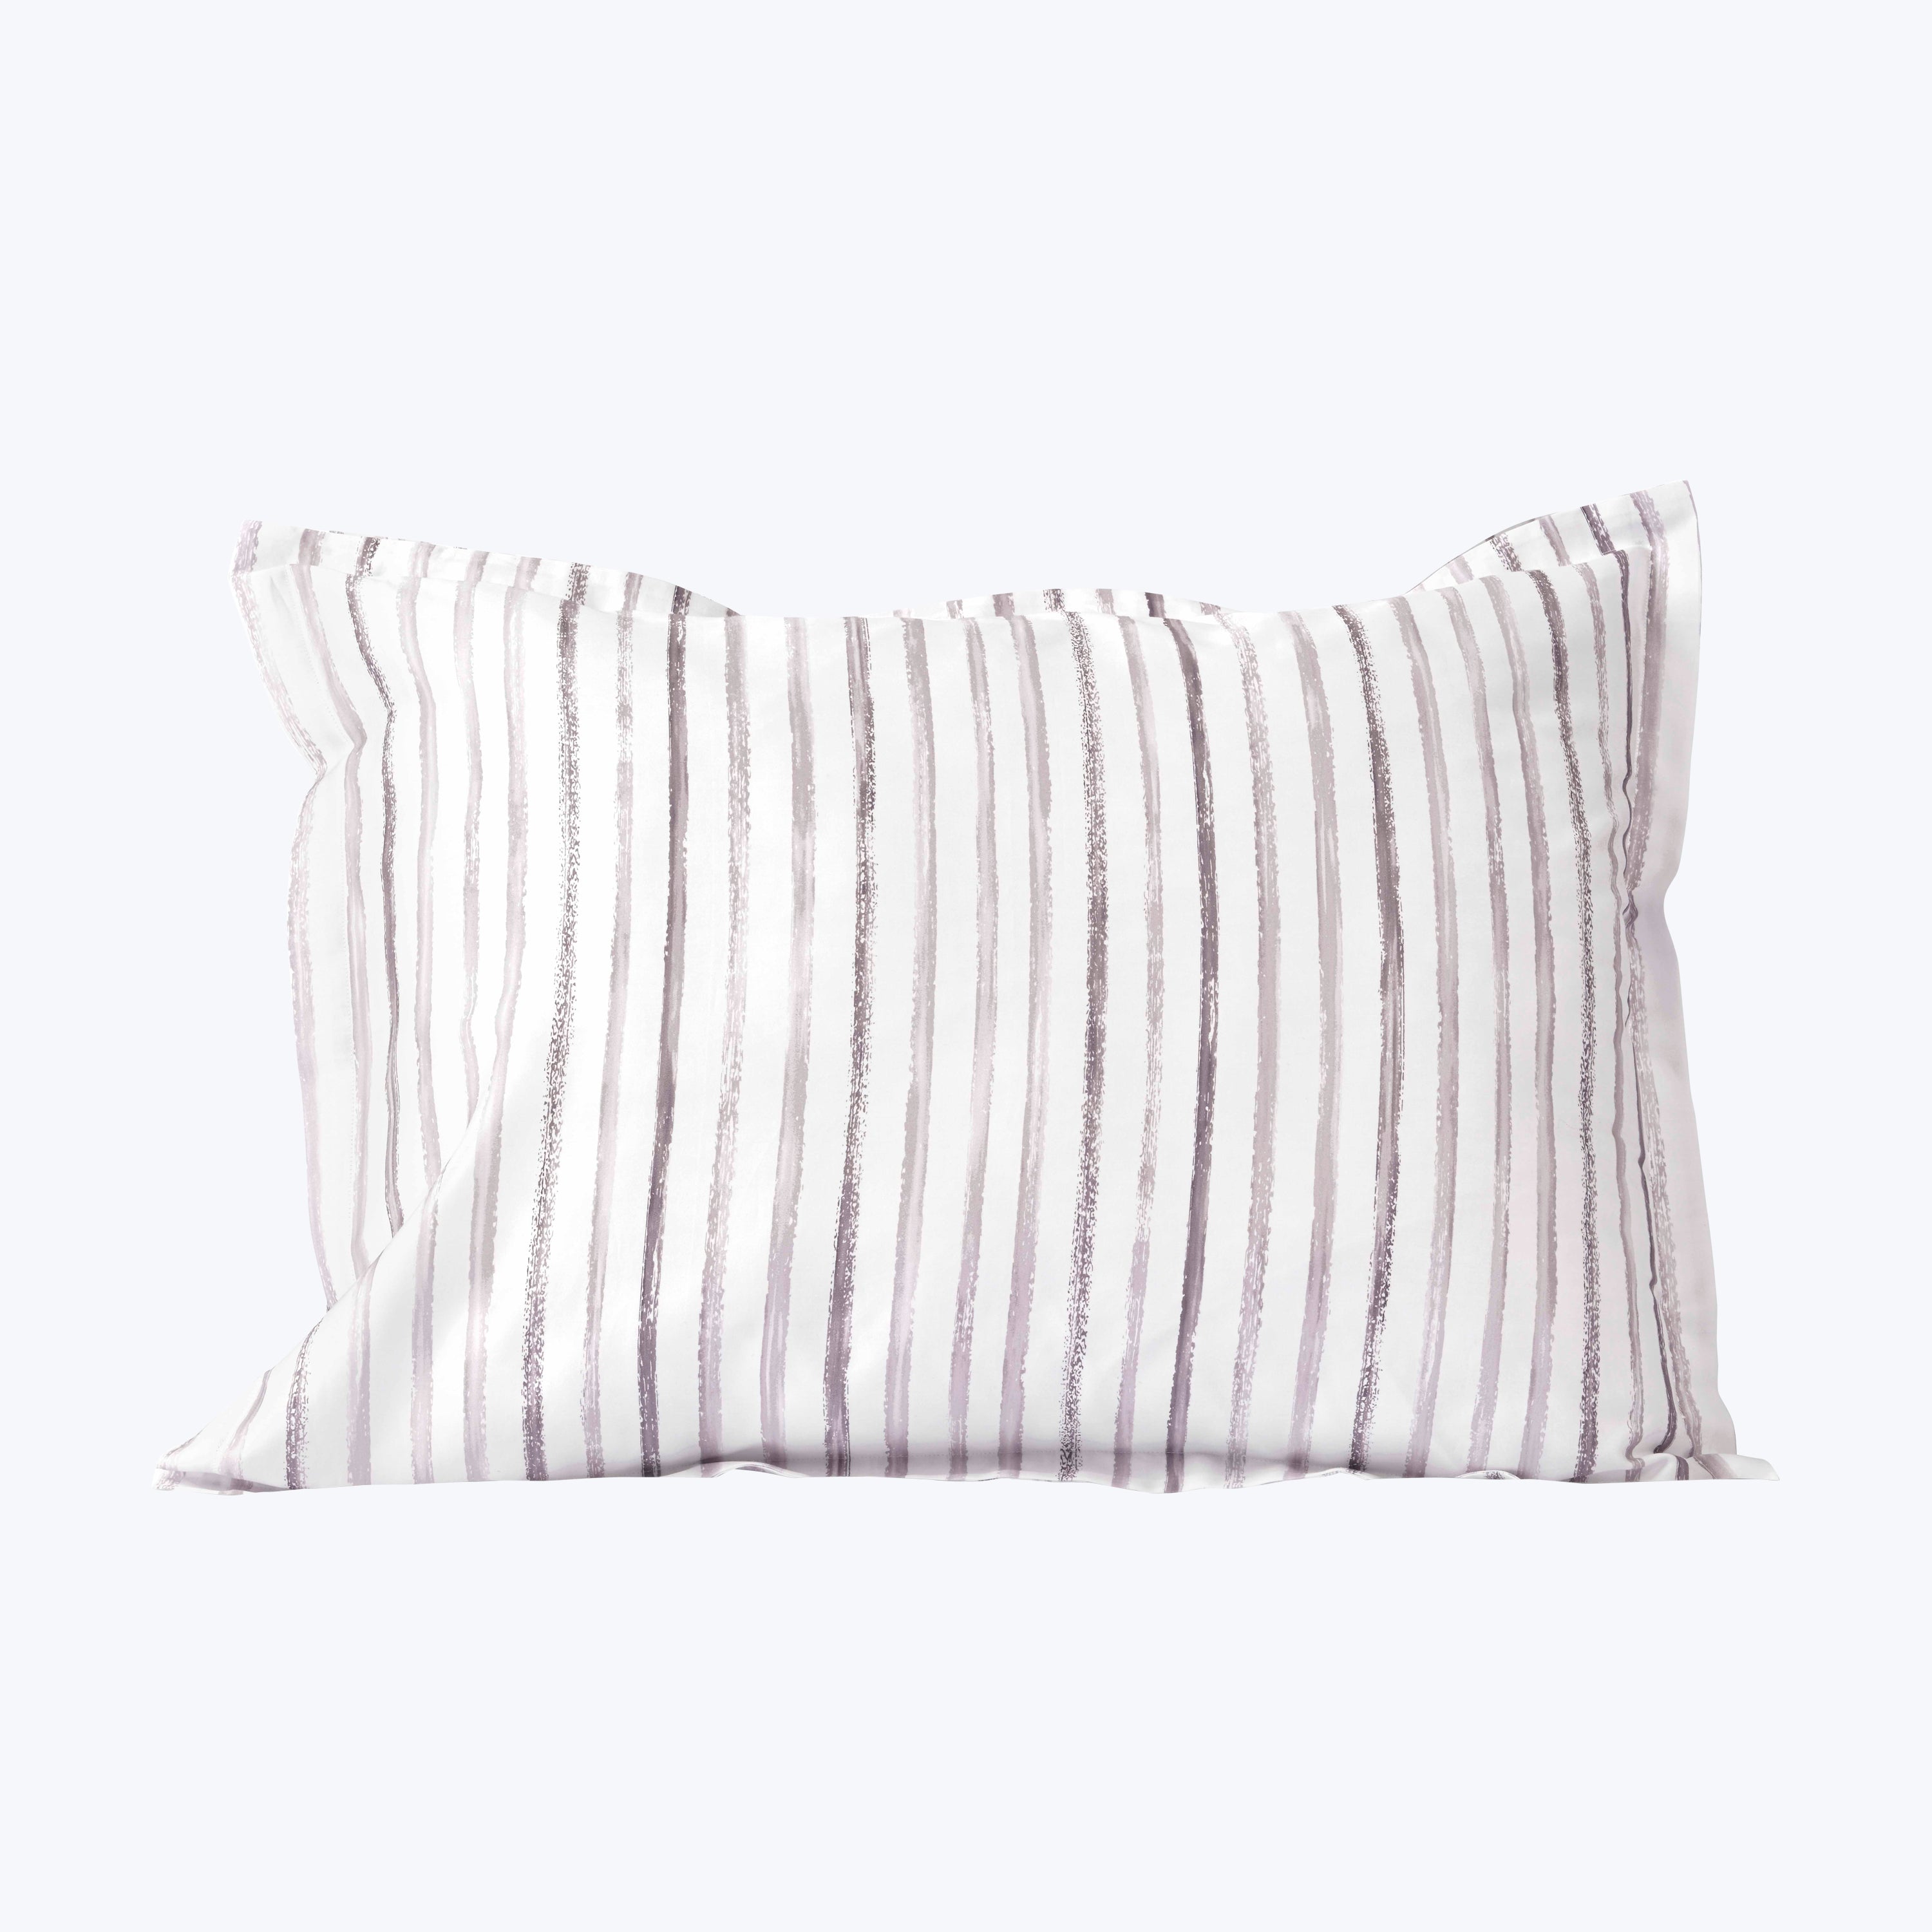 Rigato Duvets & Shams, Thistle Pillow Sham / Standard